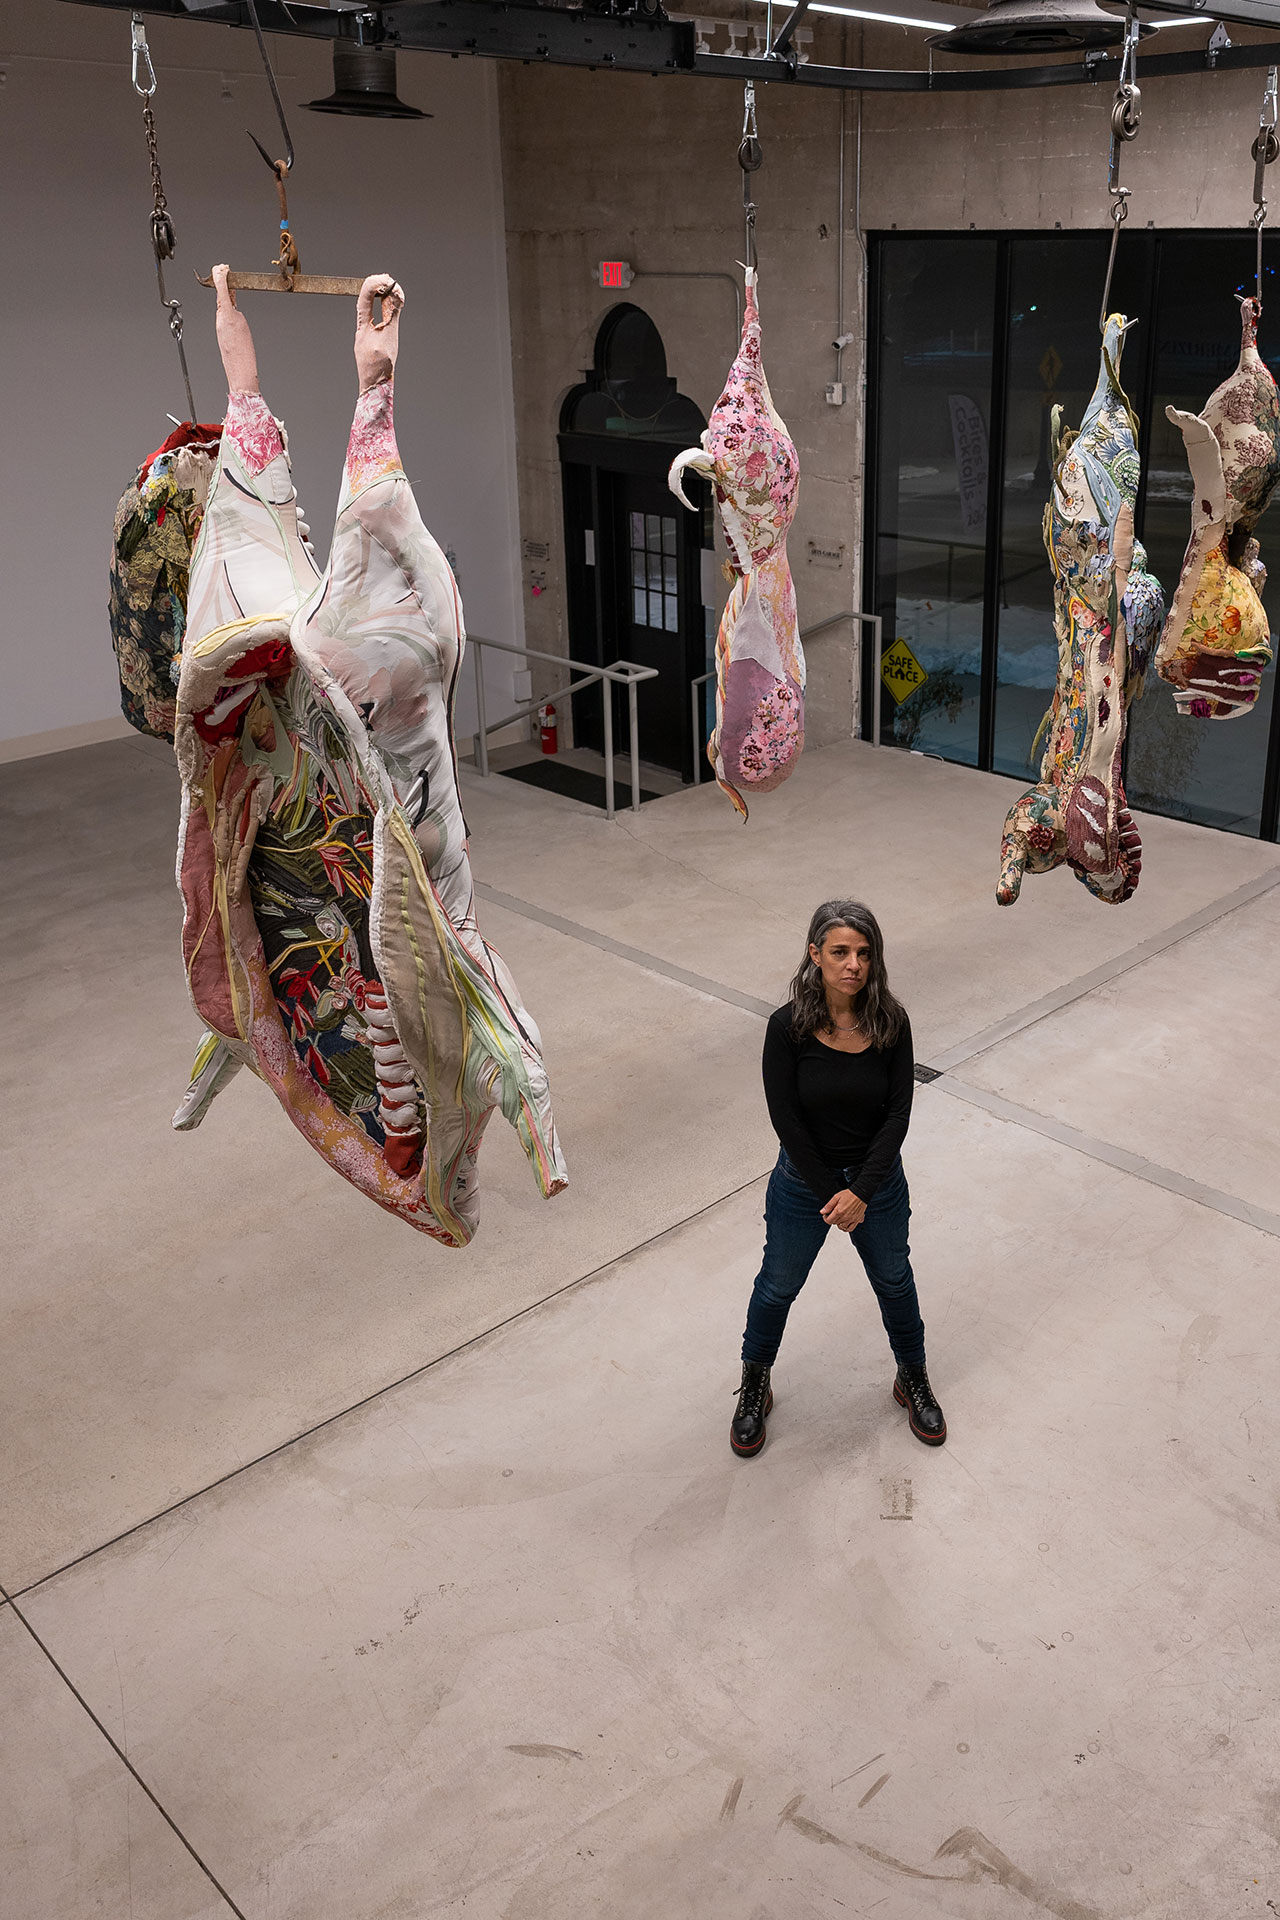 Installation view. Tamara Kostianovsky: Mesmerizing Flesh at Ogden Contemporary Arts. Photography by Cody Ard. Courtesy Ogden Contemporary Arts.